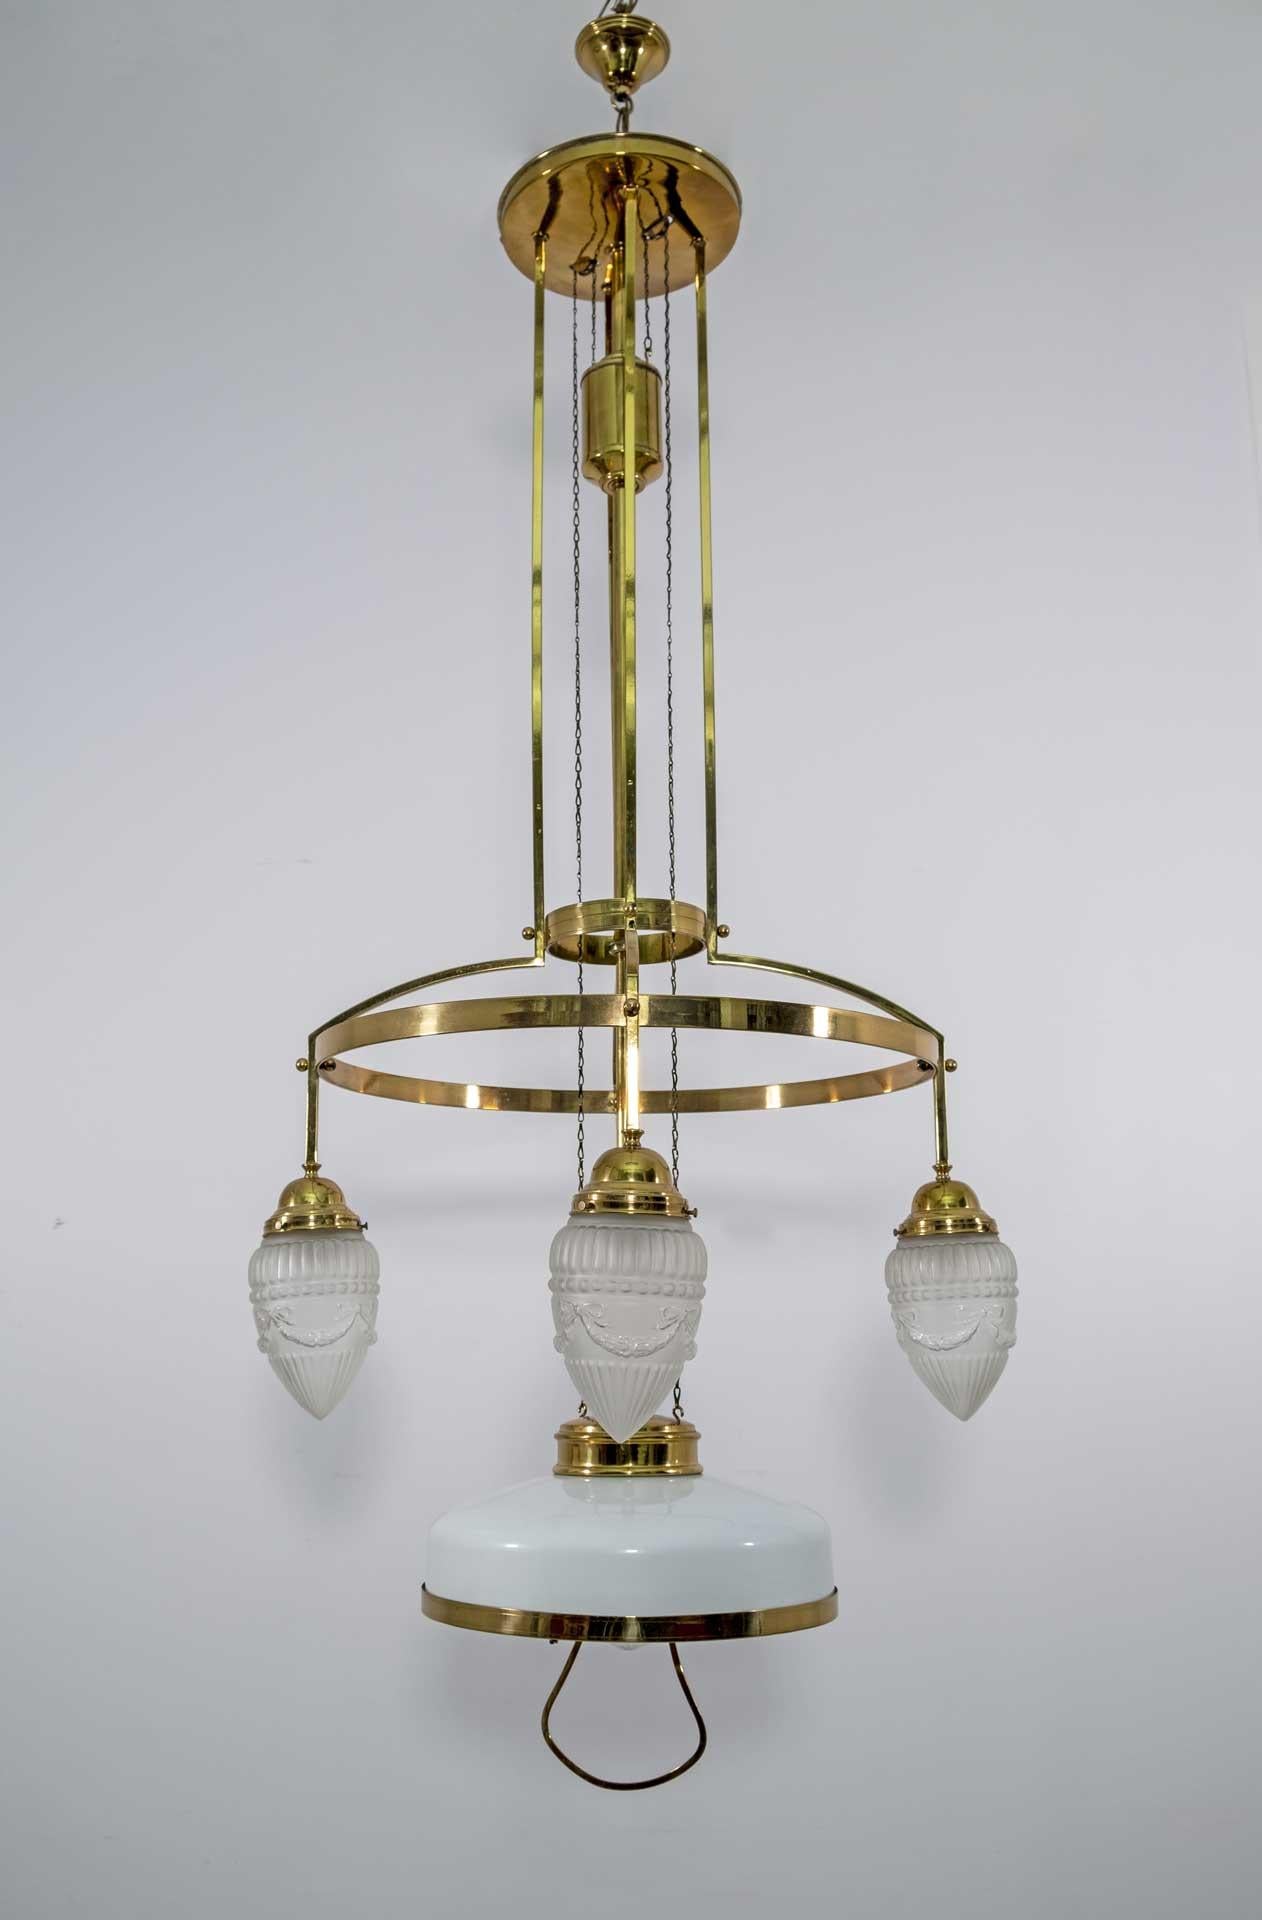 Adjustable 5-light Jugendstil chandelier with original Vienna opaline glass, circa 1920s
Normal height 135cm extendable up to 175cm.